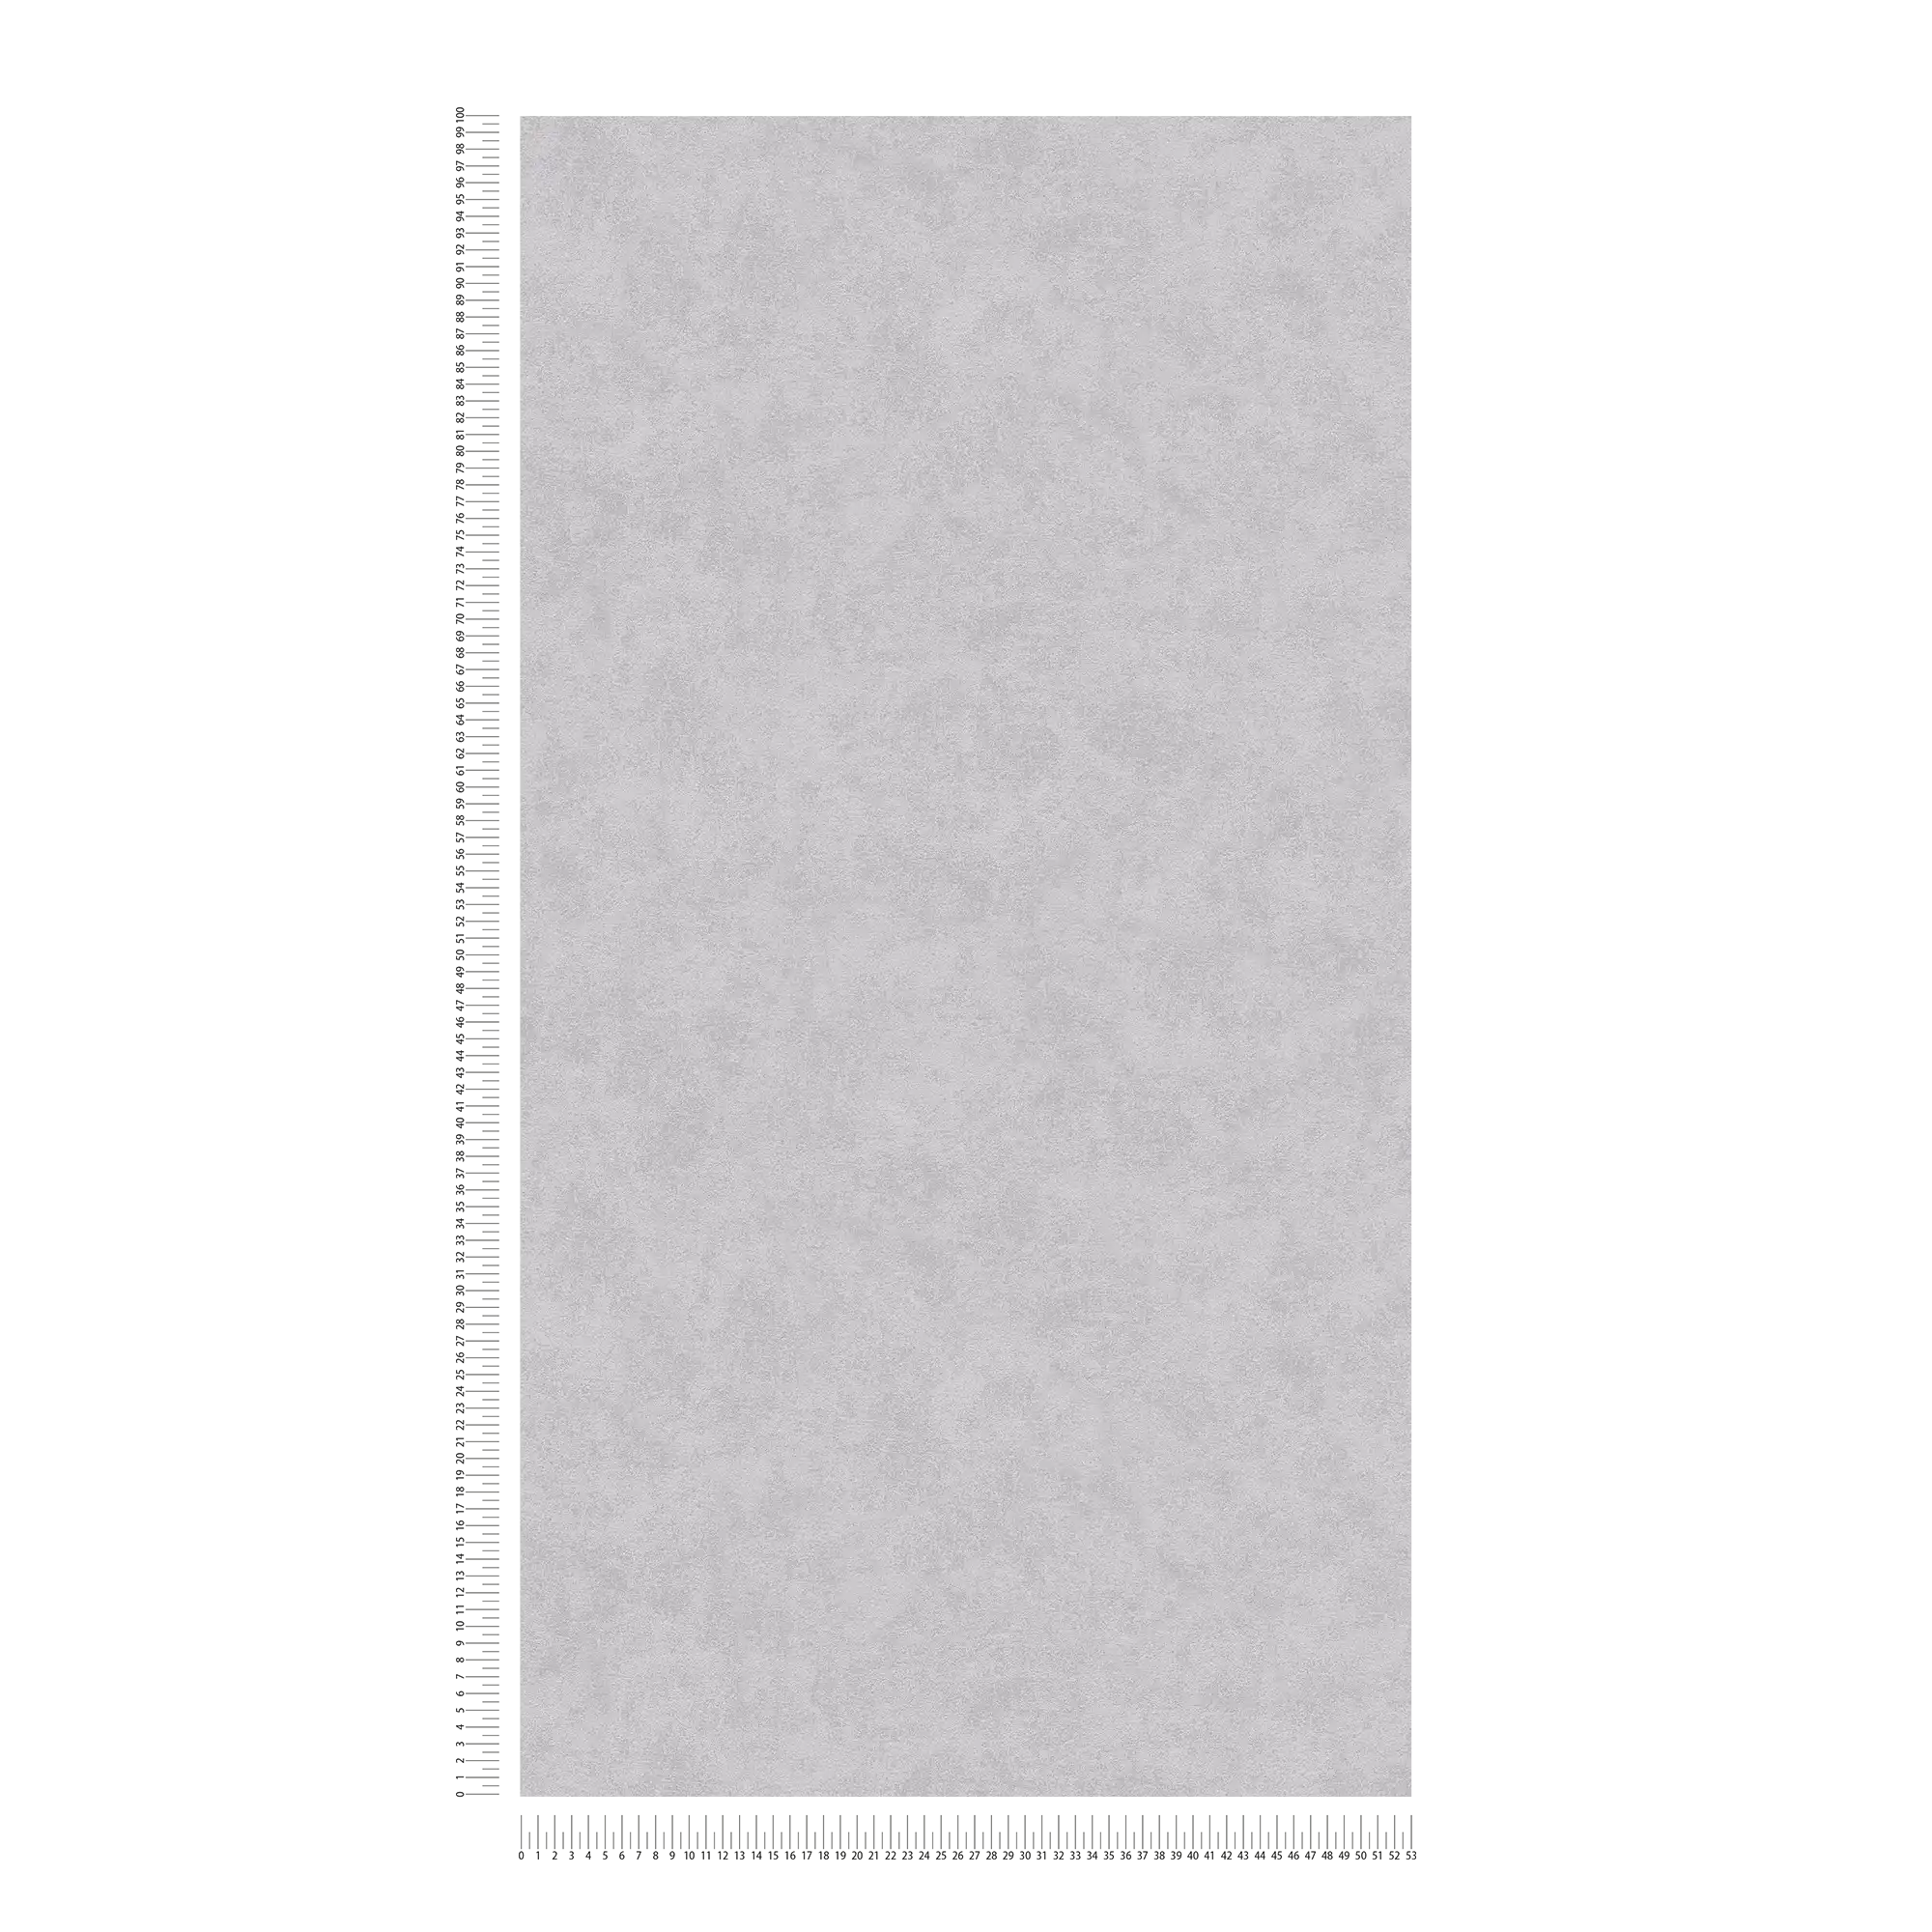             Non-woven wallpaper concrete grey matt with structure embossing
        